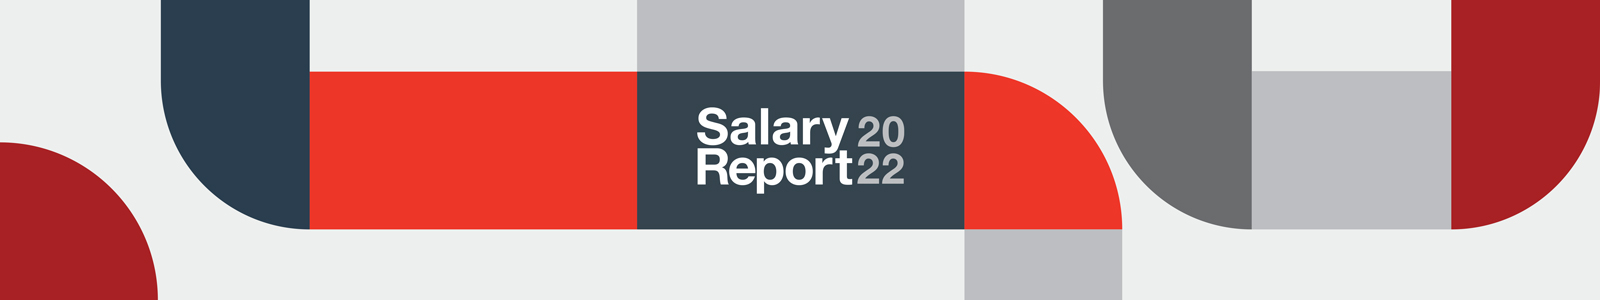 Salary Report 2022